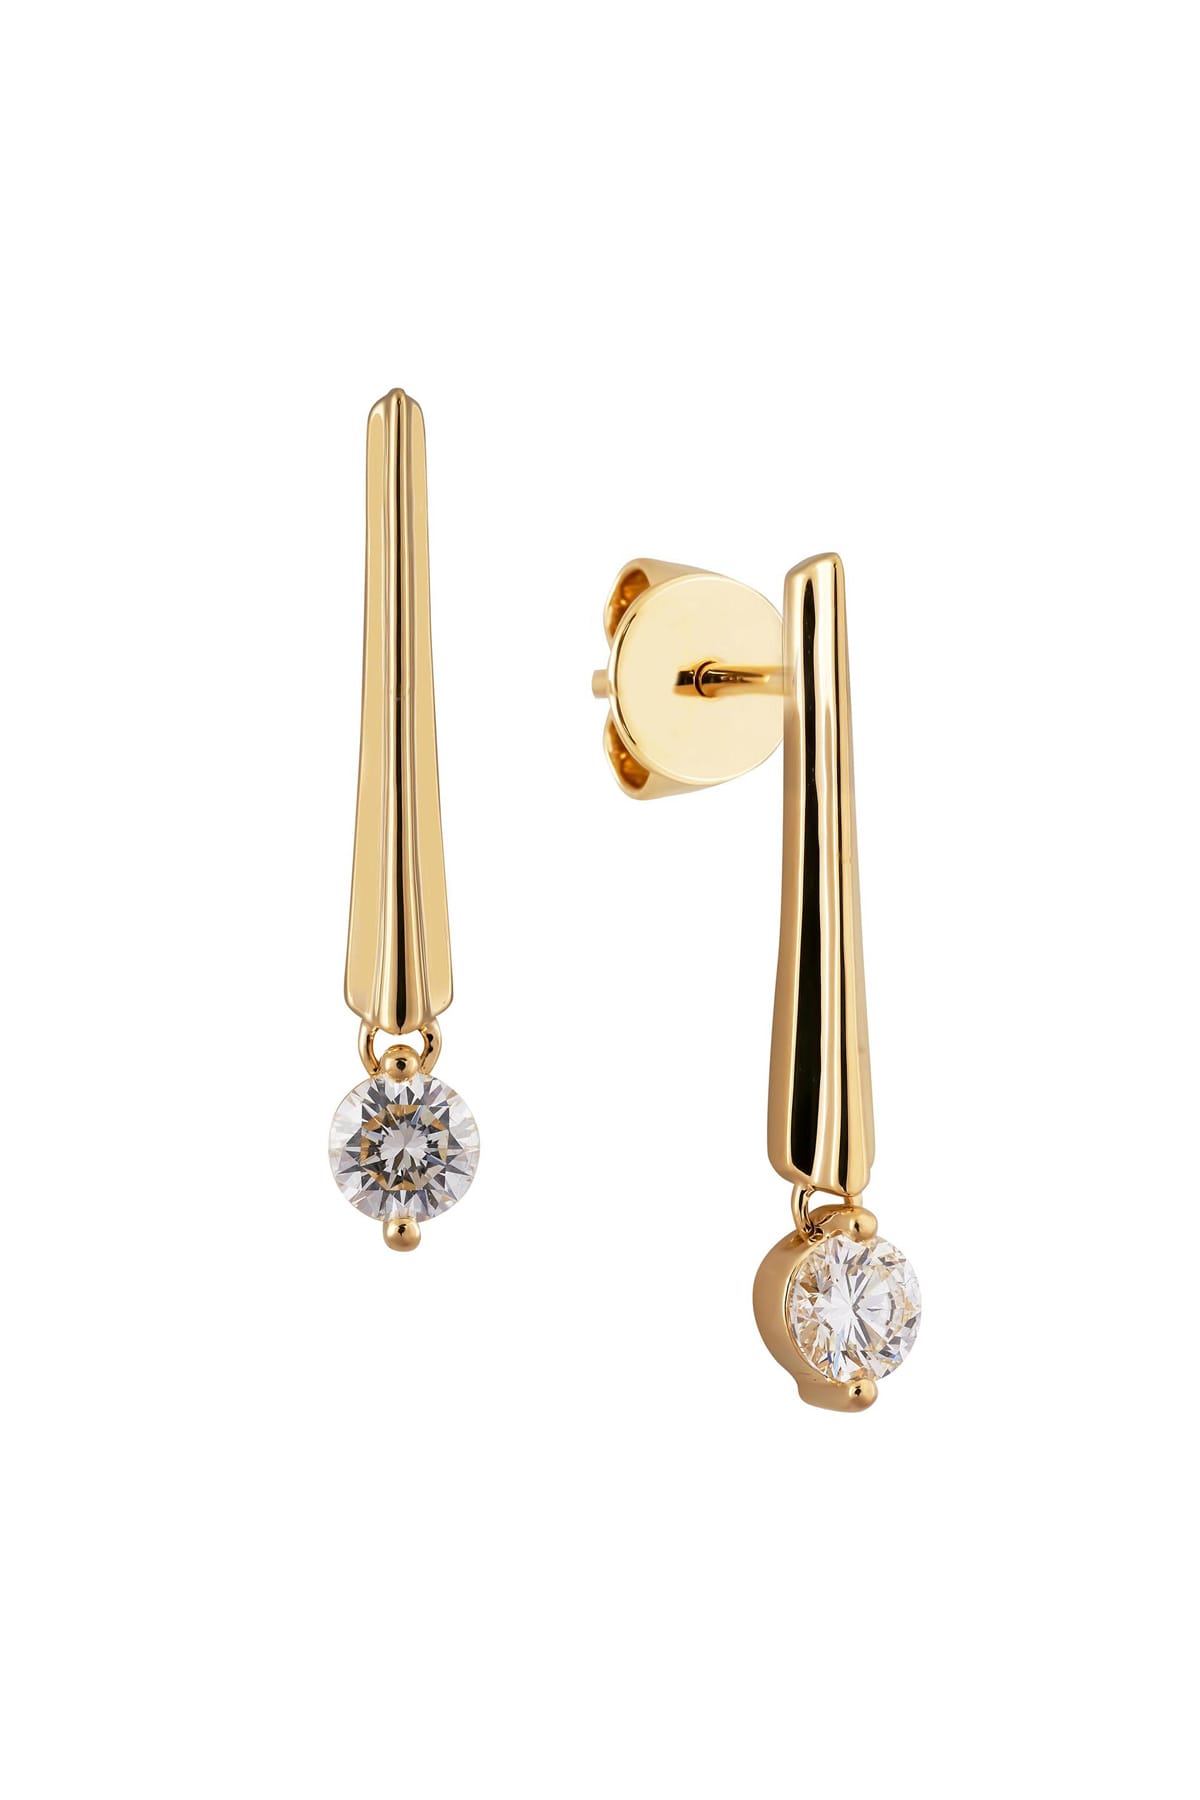 Diamond Set Drop Stud Earrings set in 18ct Yellow Gold available at LeGassick Diamonds and Jewellery Gold Coast, Australia.